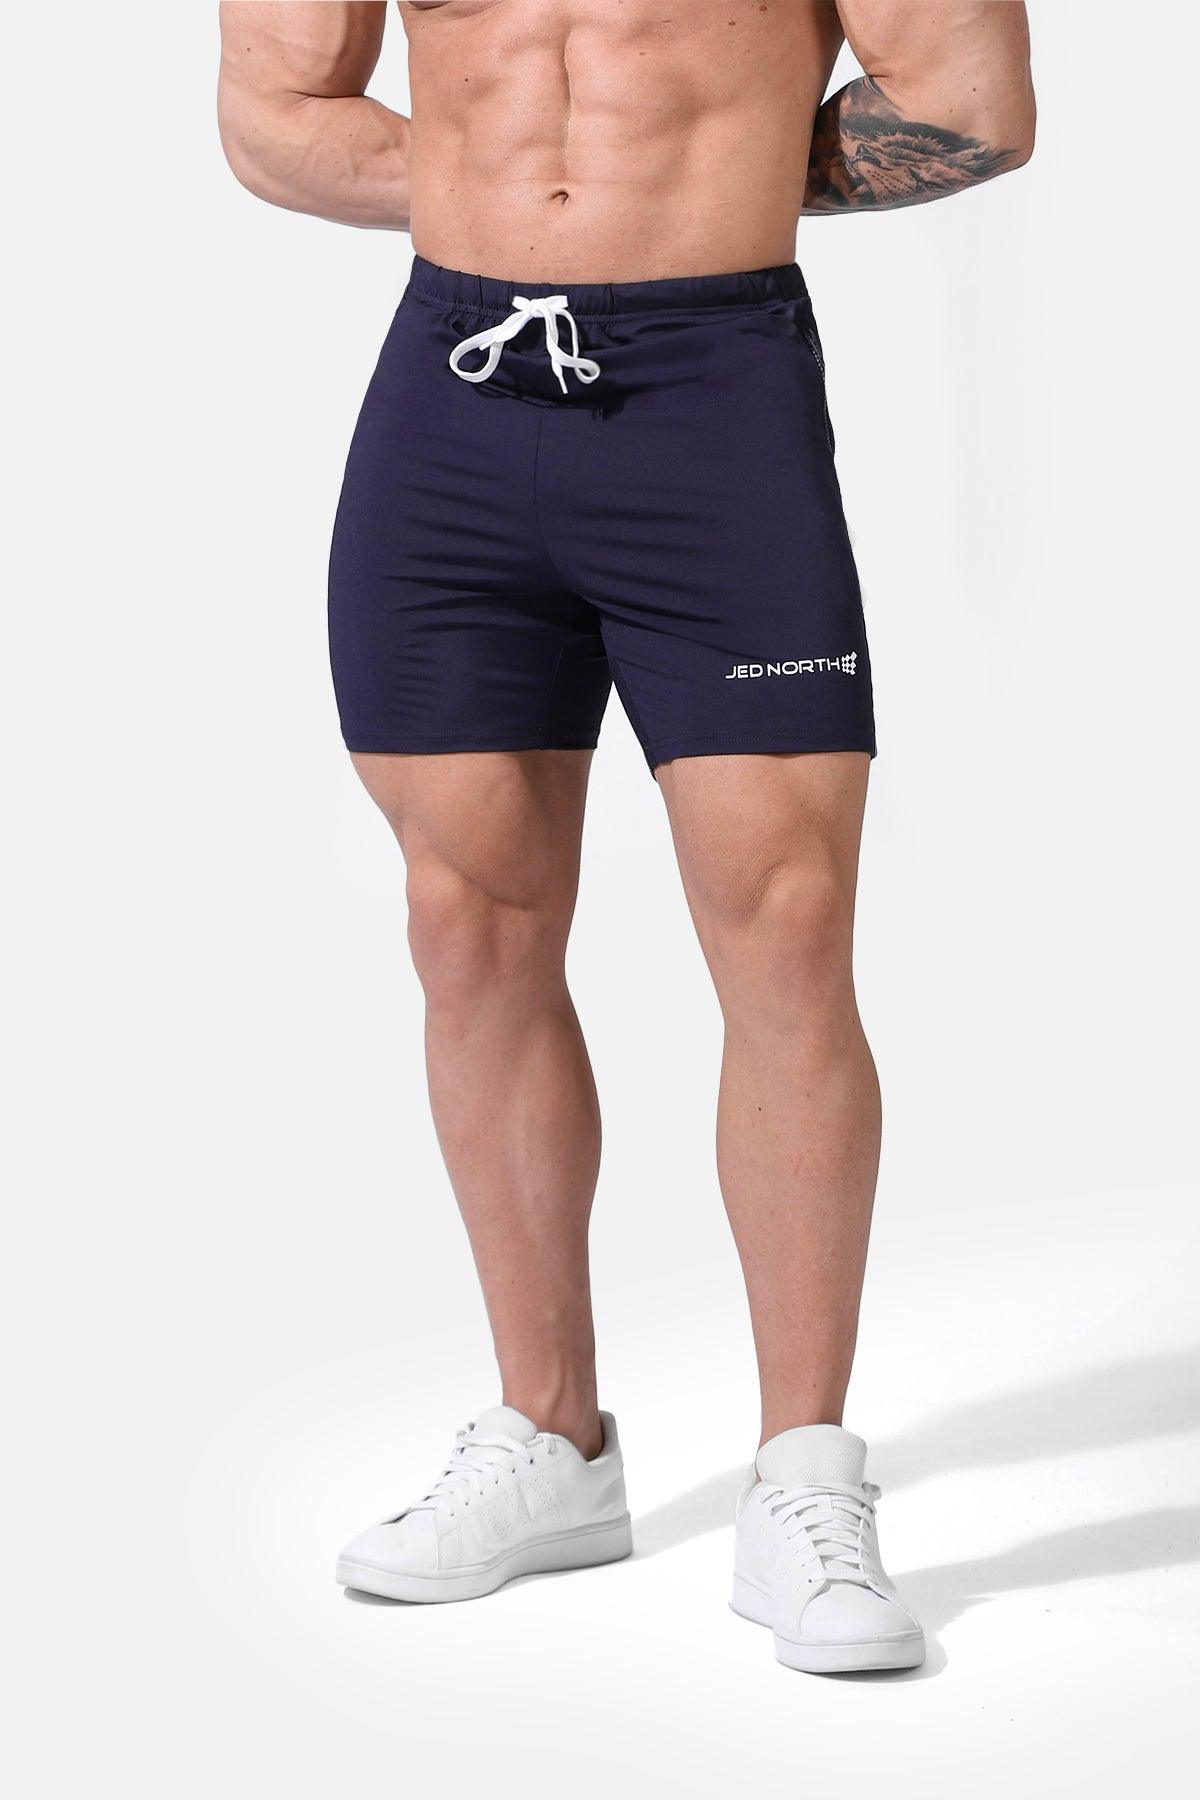 Agile Plus 5.5'' Bodybuilding Shorts w Zipper Pockets - Navy